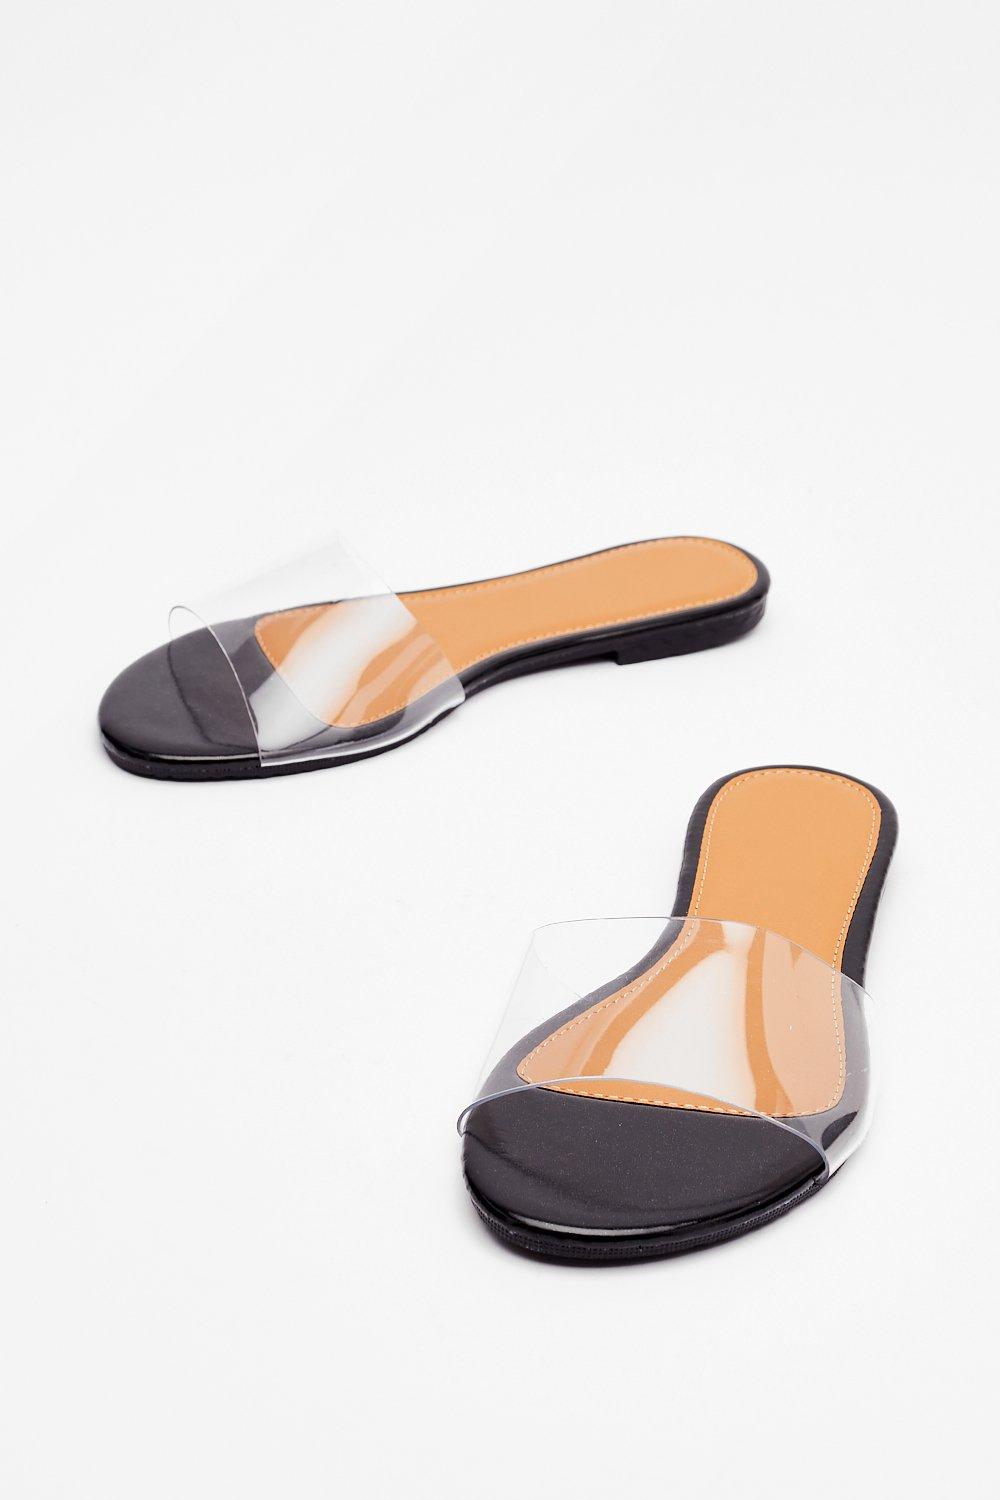 clear transparent flat sandals